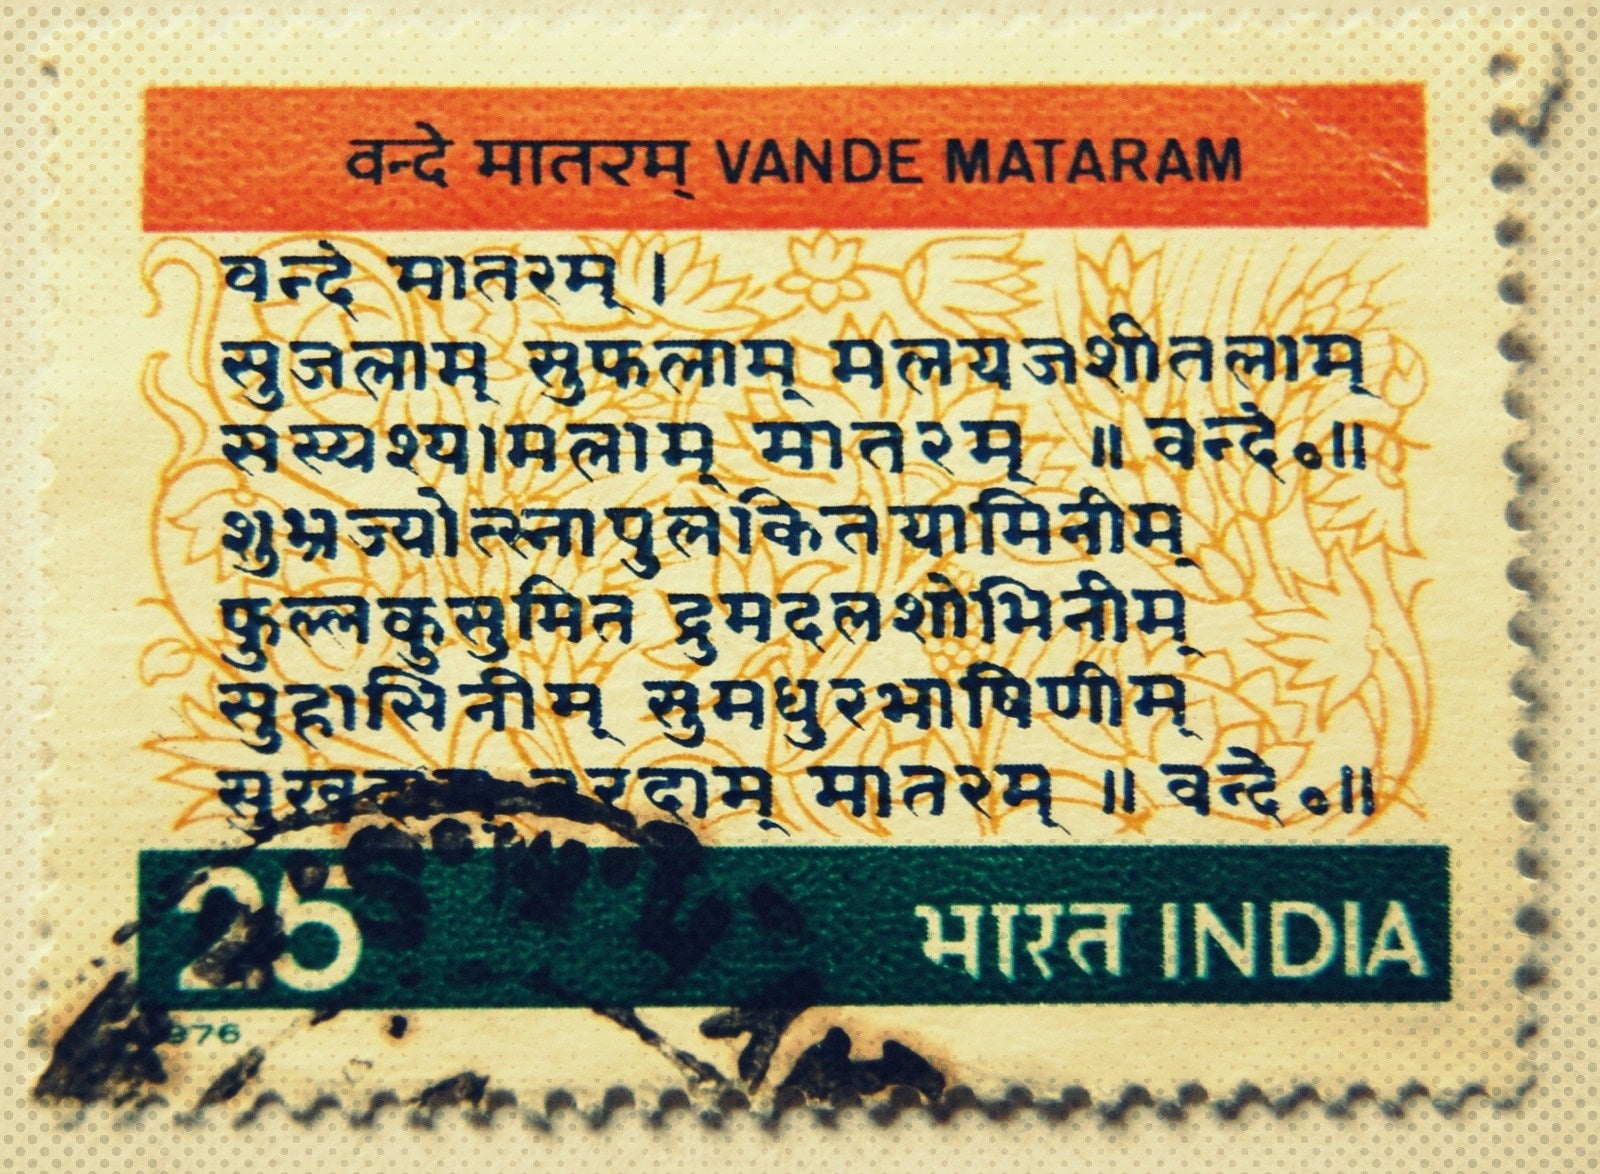 Does a Pluralistic Nation Like India Really Need 'Vande Mataram'?